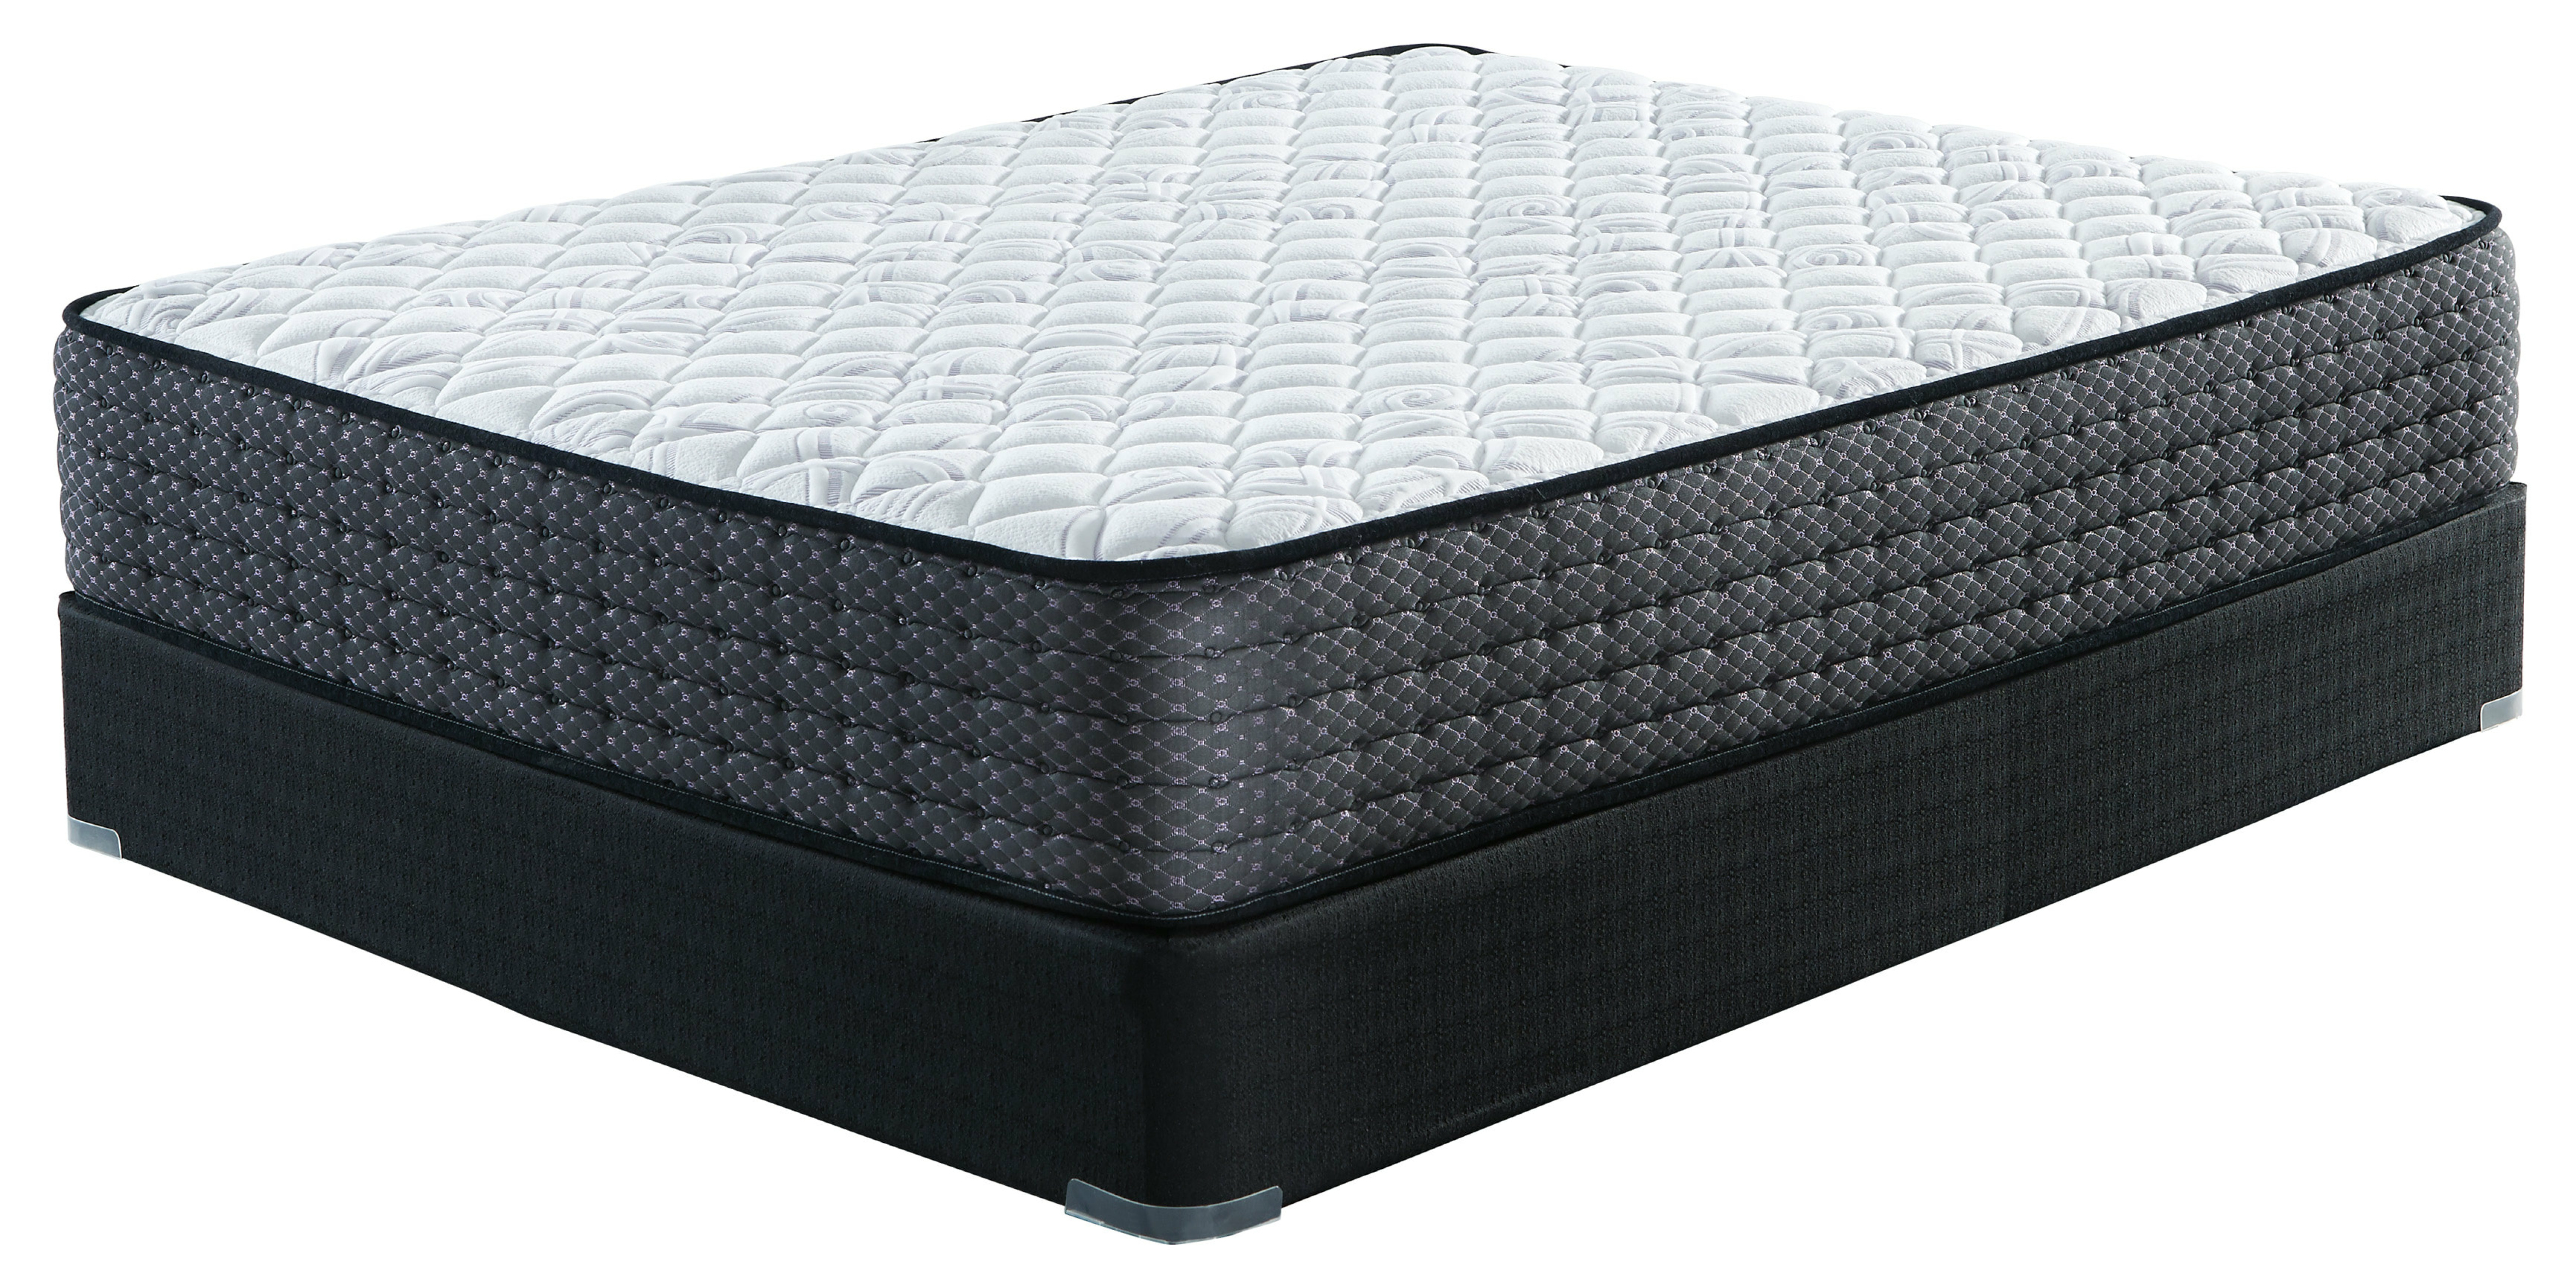 sierra mattress by ashley review